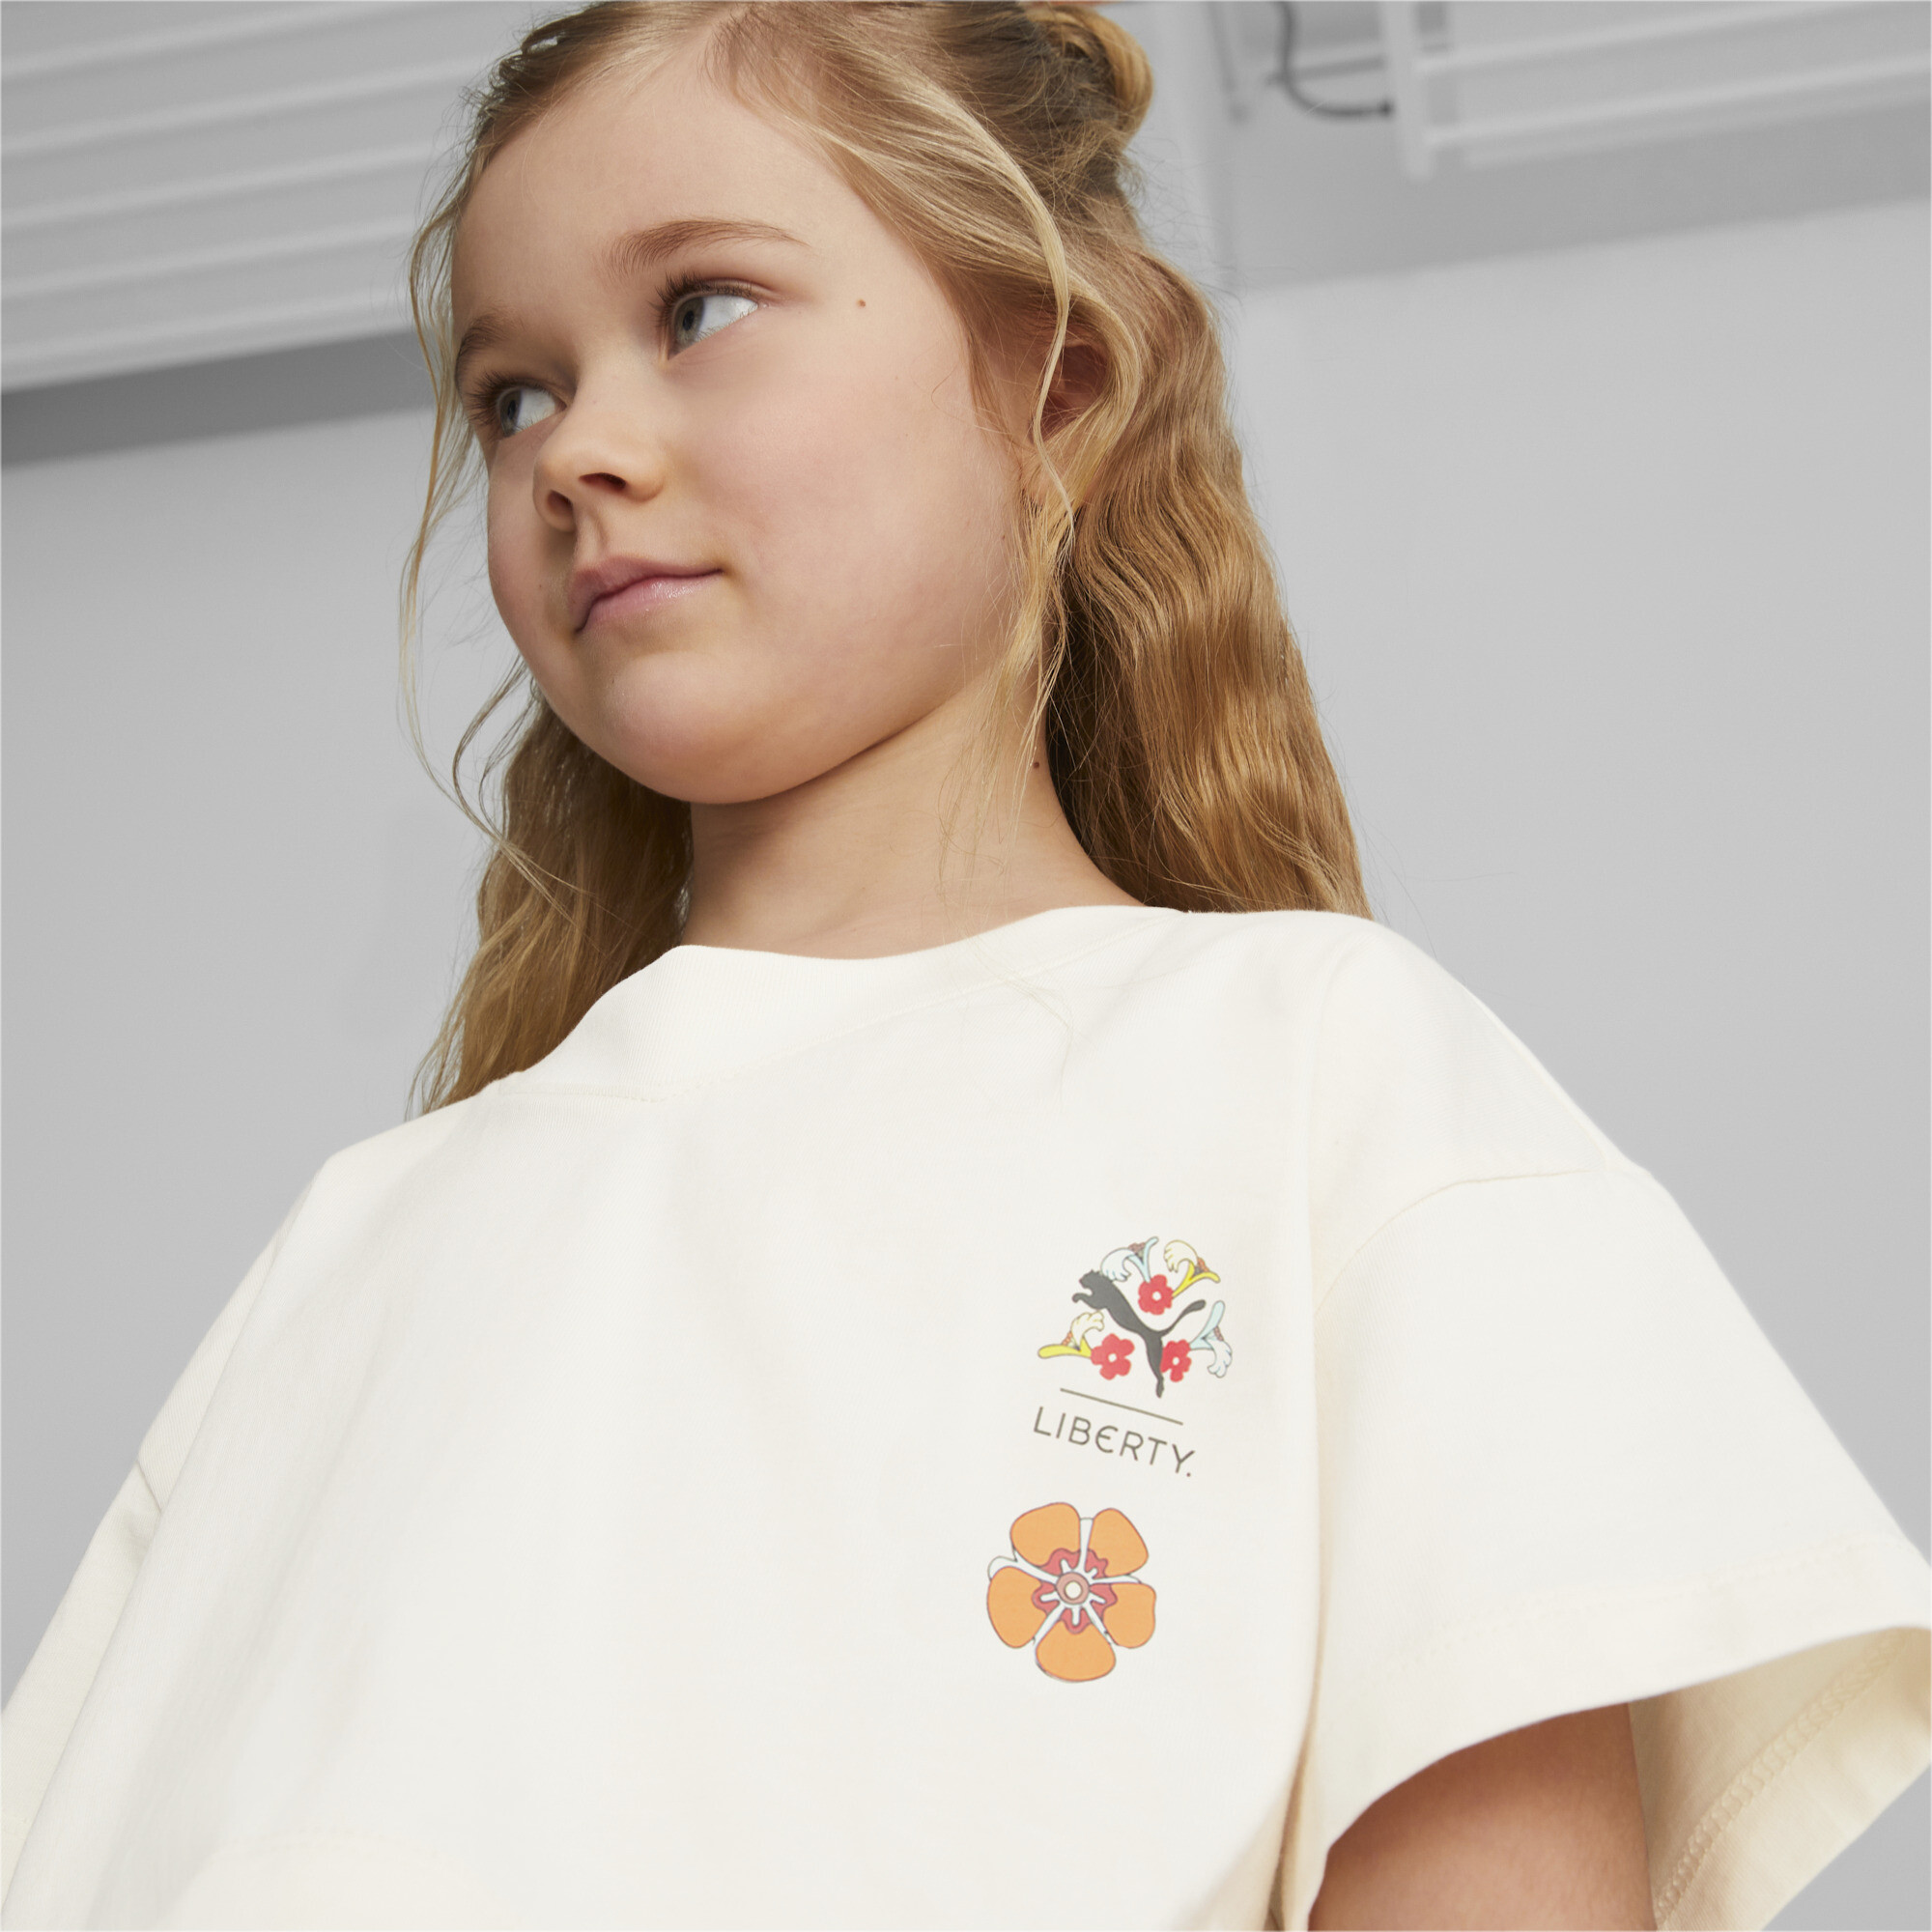 PUMA X LIBERTY T-Shirt Kids In White, Size 5-6 Youth